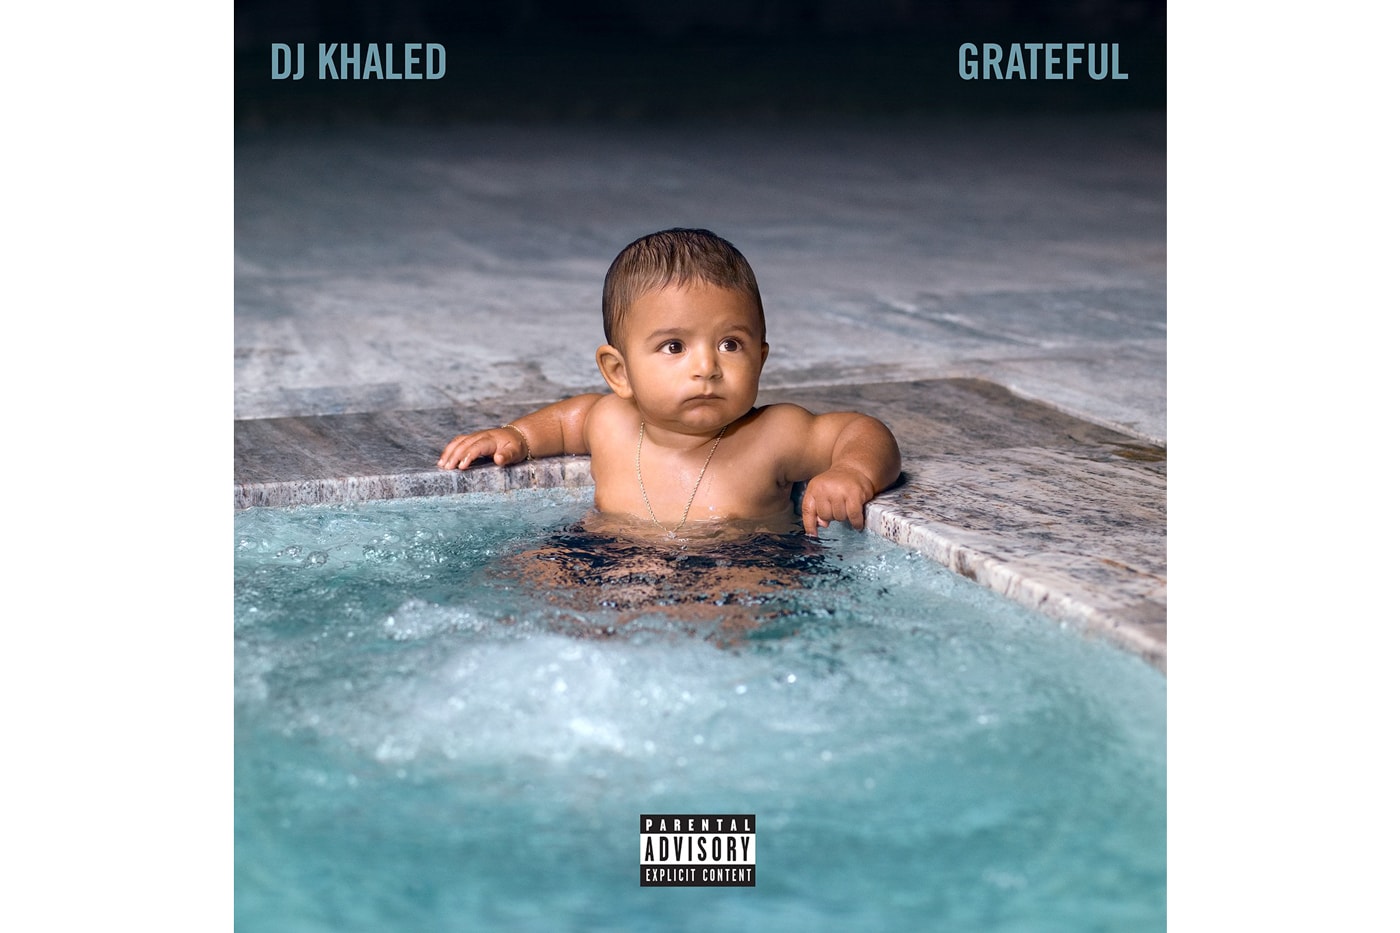 DJ Khaled Grateful Tracklist Drake Travis Scott Future Rihanna Young Thug Rick Ross 2 Chainz